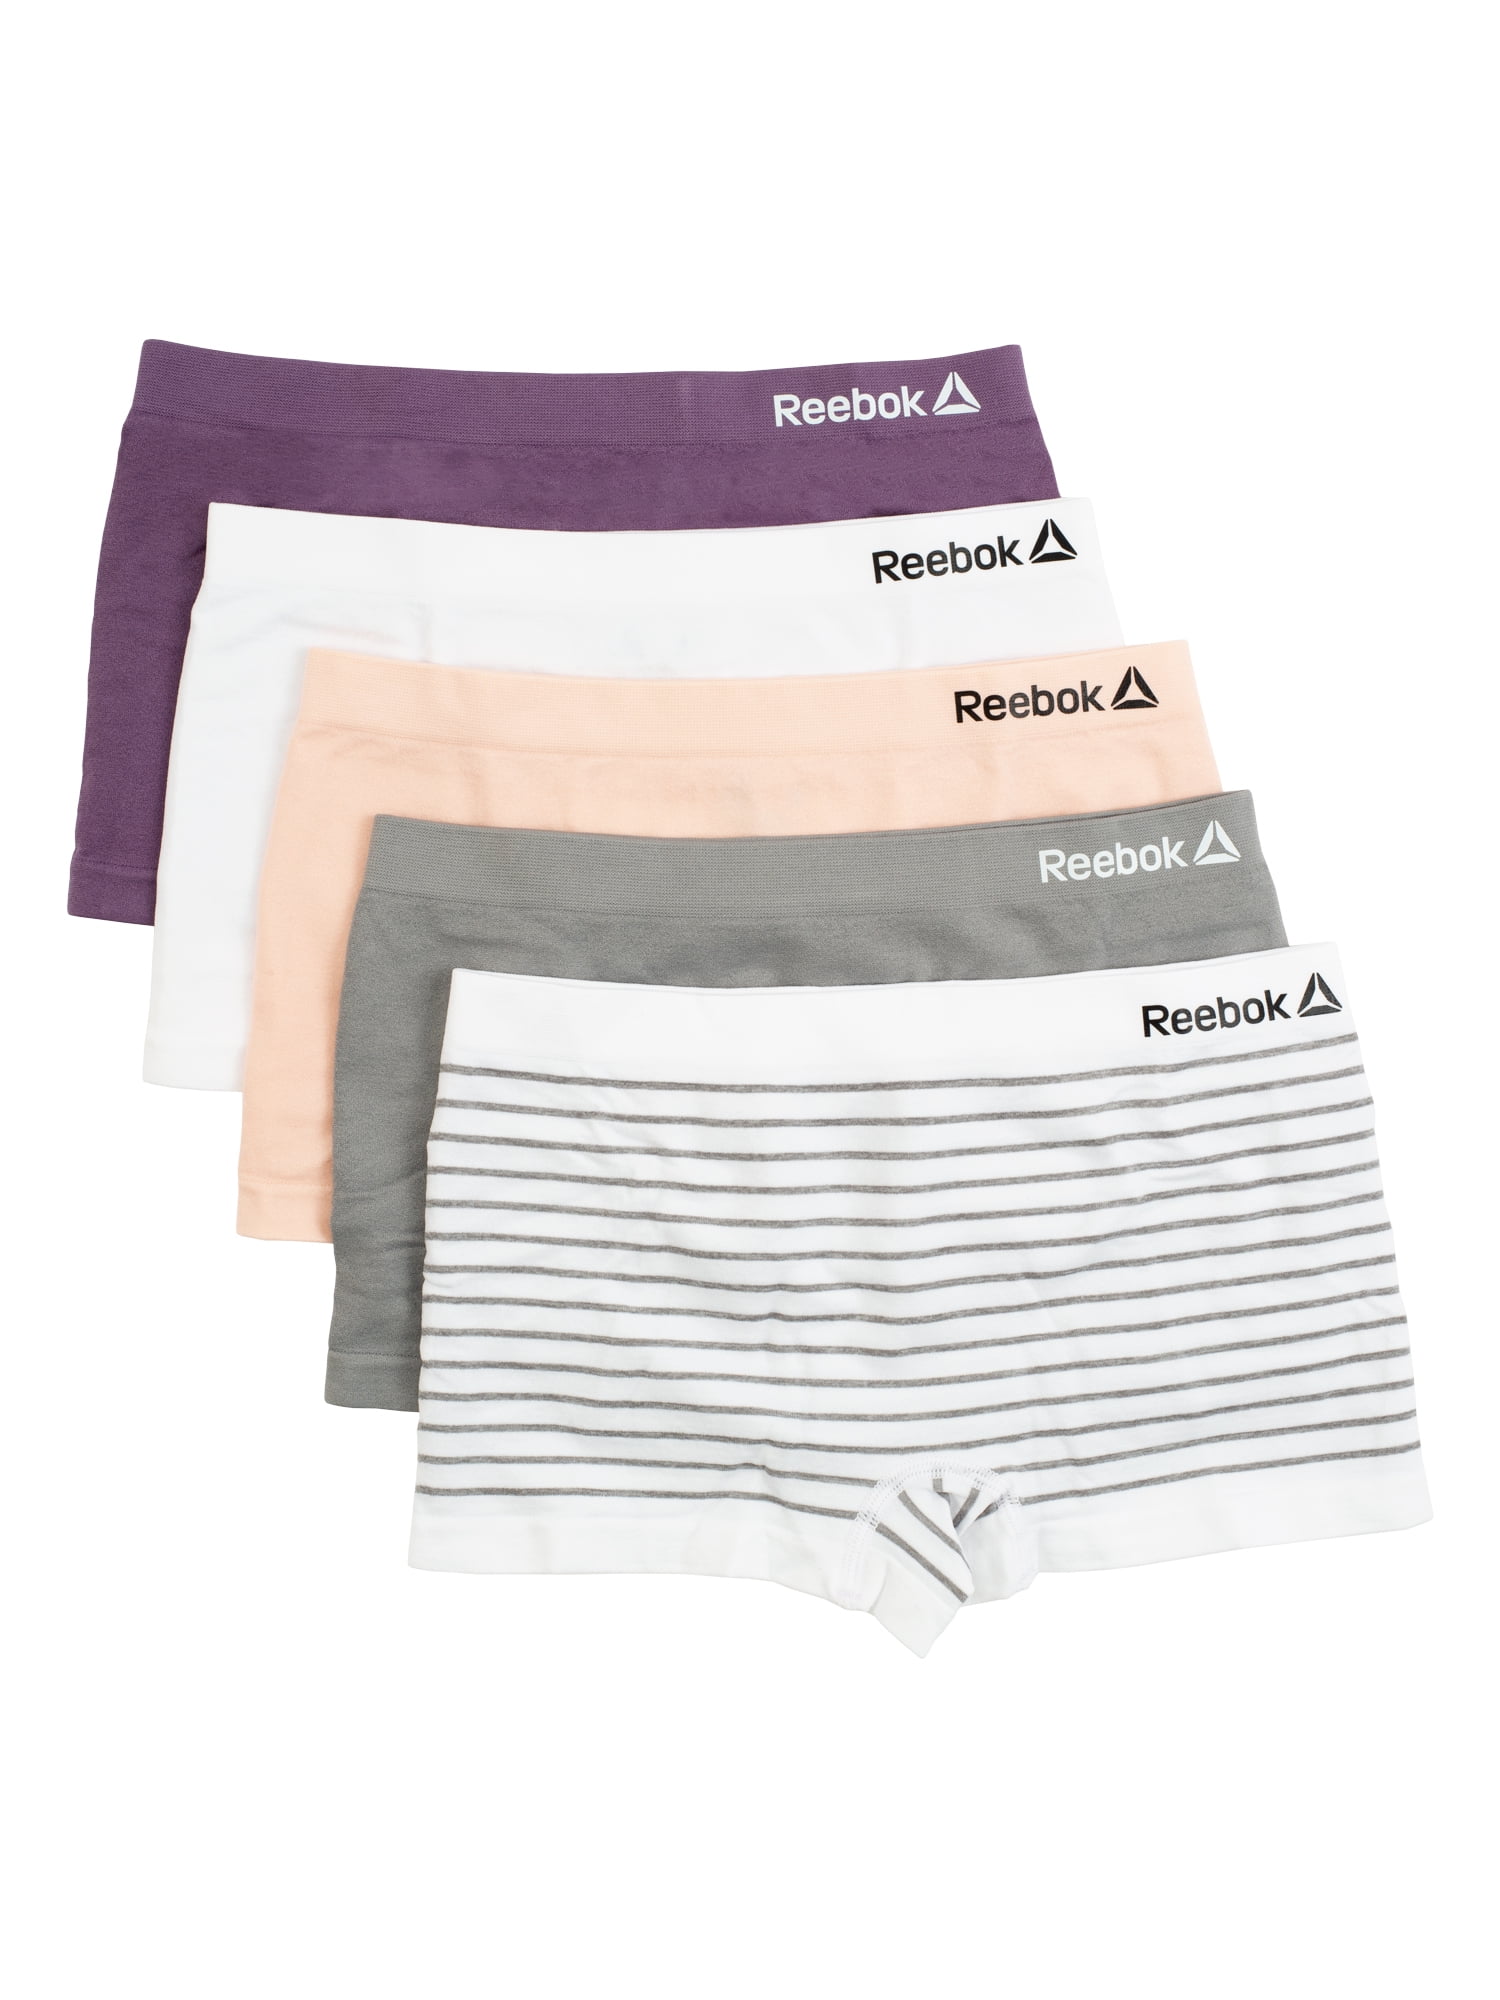  Reebok Girls' Underwear - Seamless Boyshort Panties (3